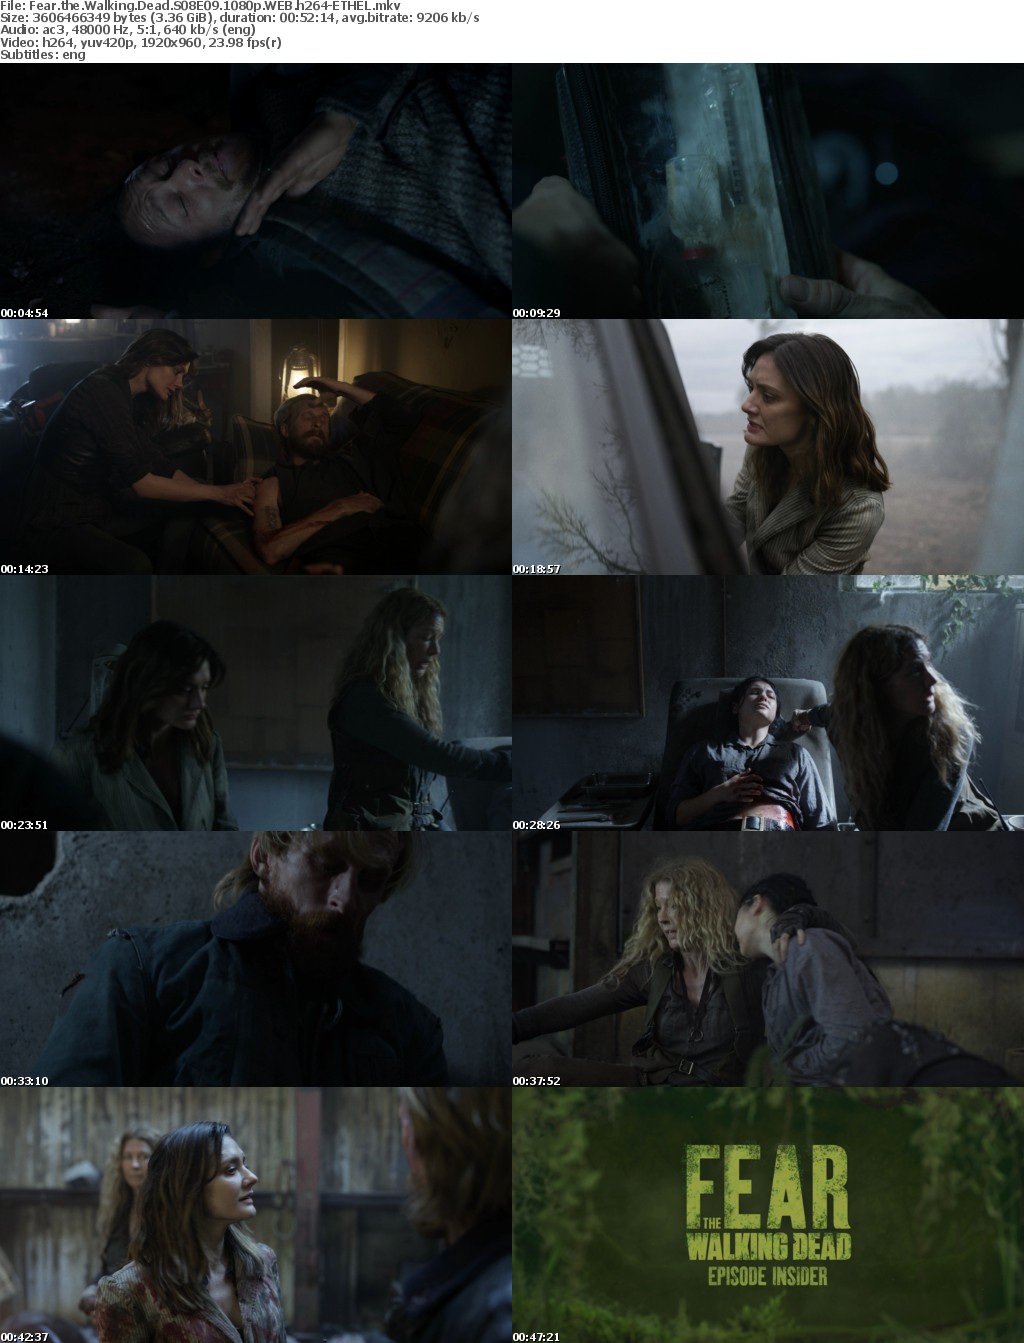 Fear the Walking Dead S08E09 1080p WEB h264-ETHEL